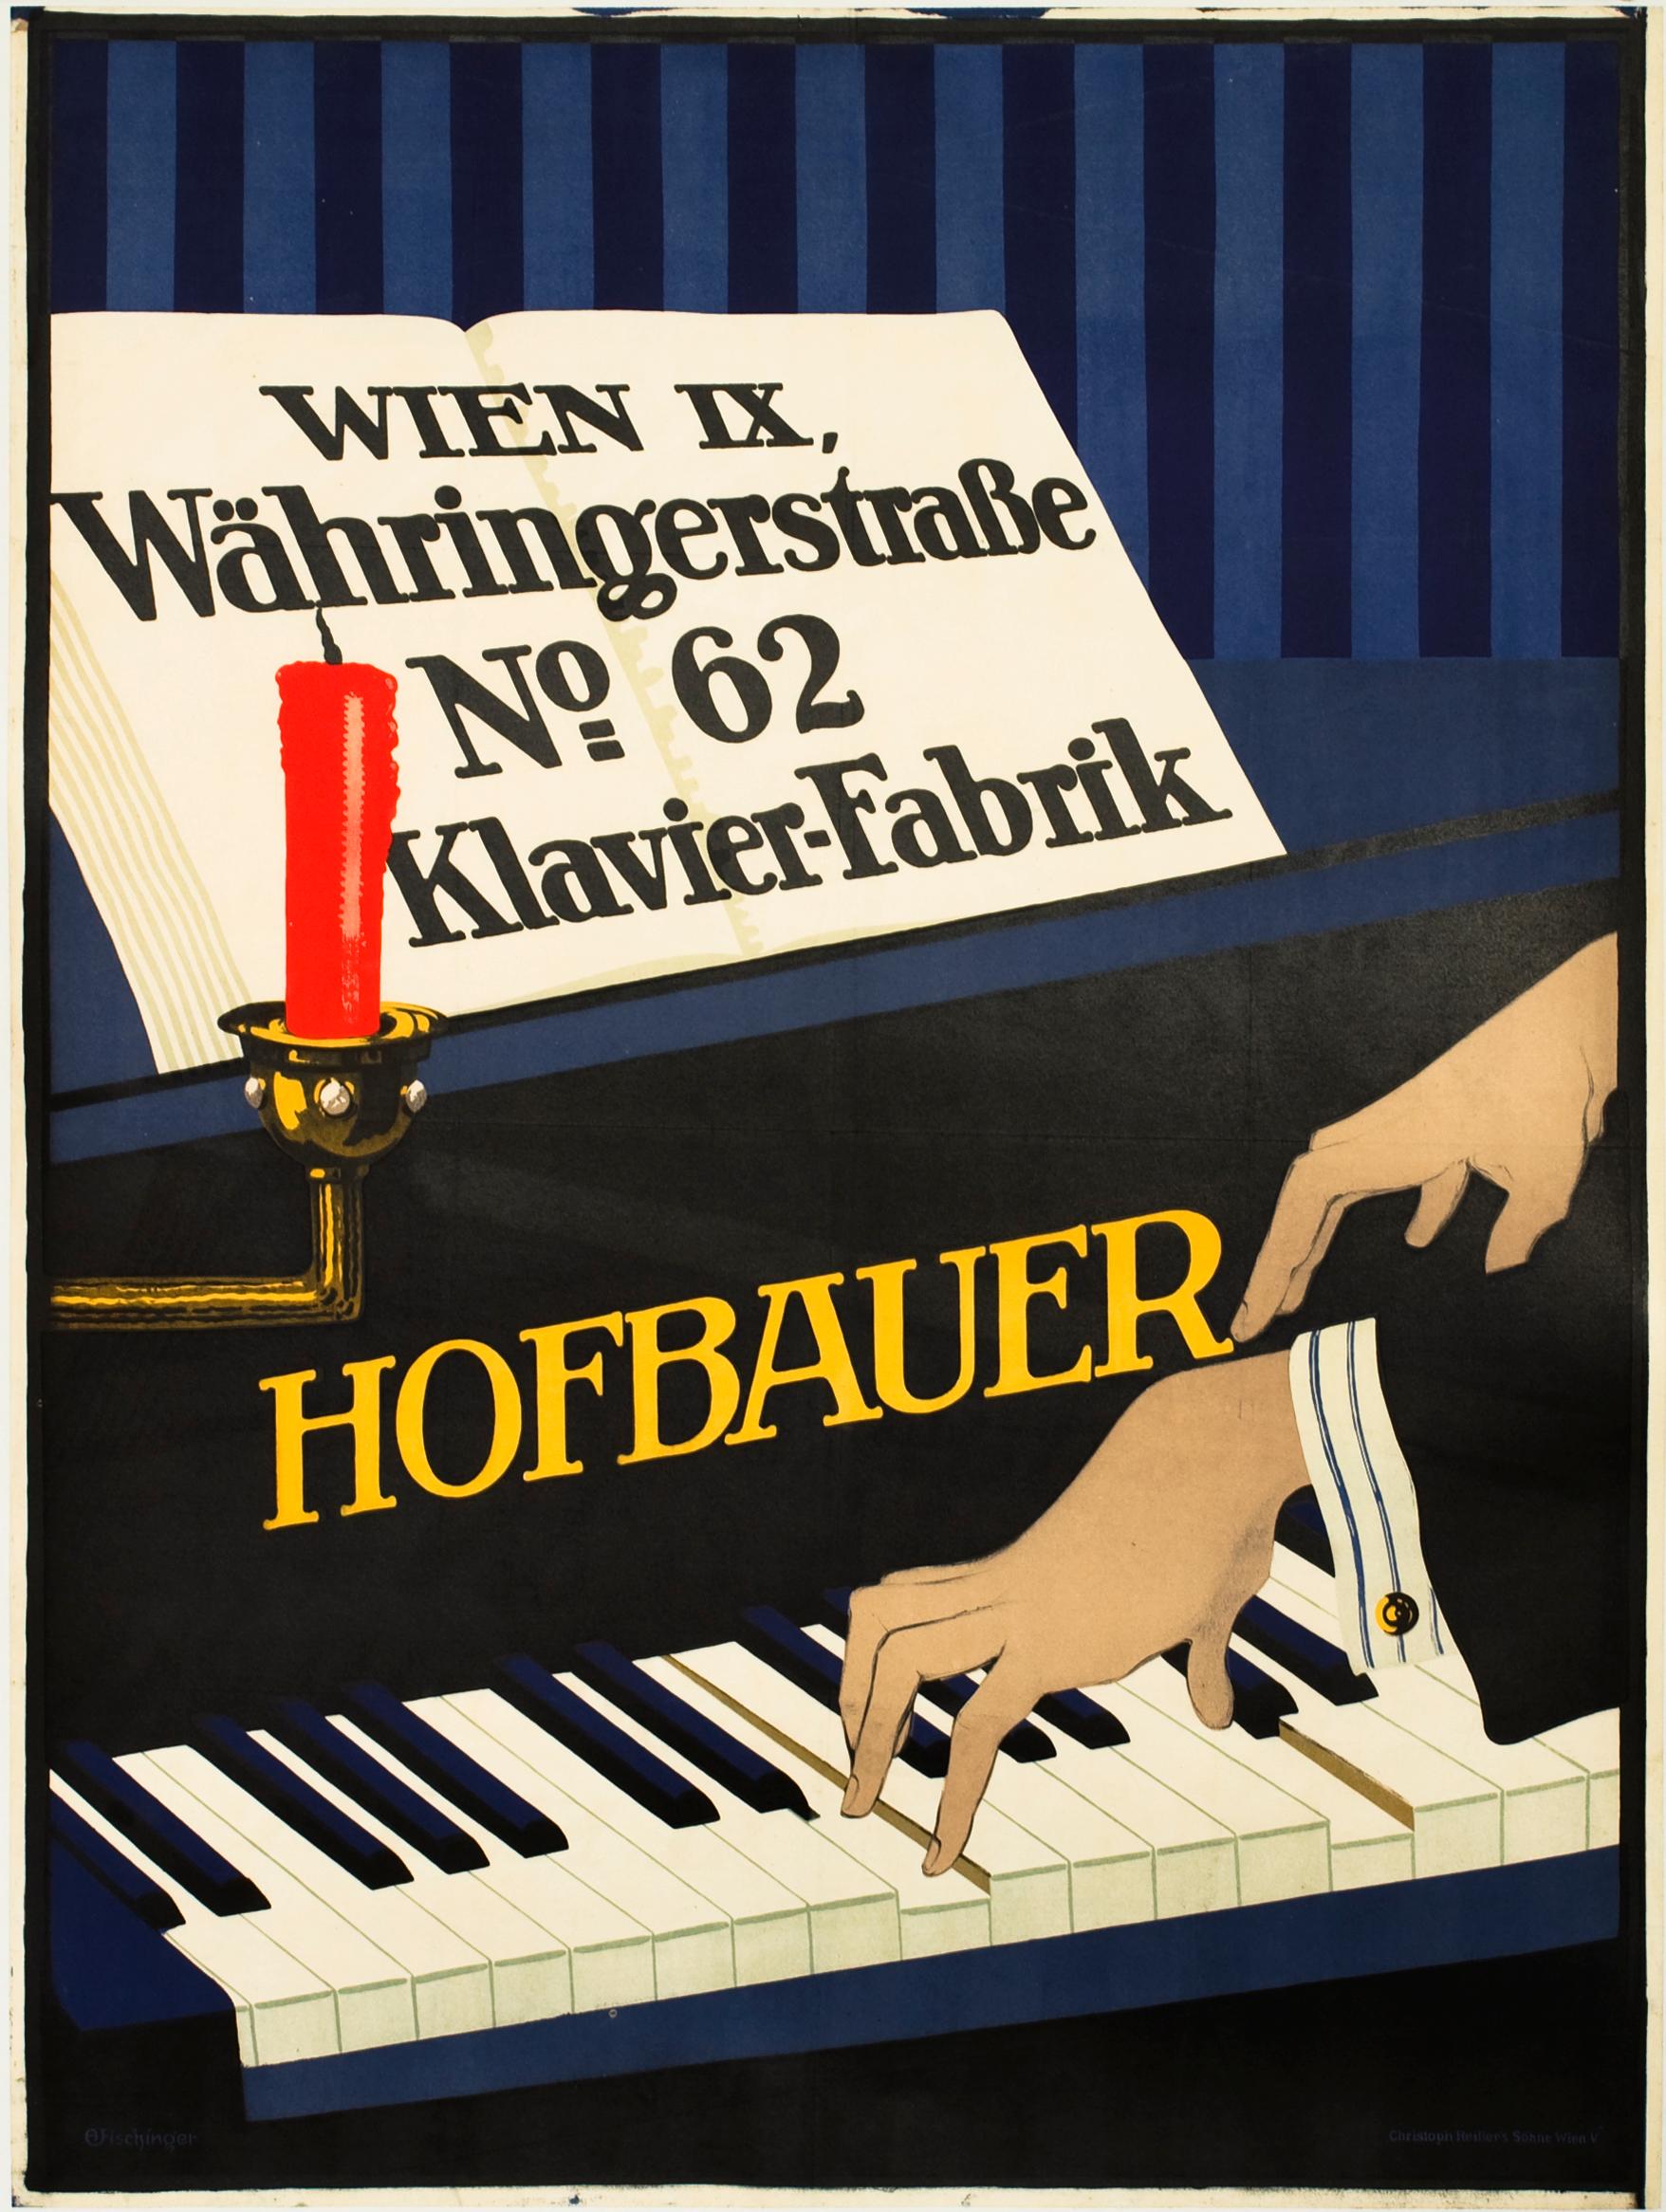 "Hofbauer Klavier - Fabrik" Original Vintage Piano Poster - Print by August Fischinger